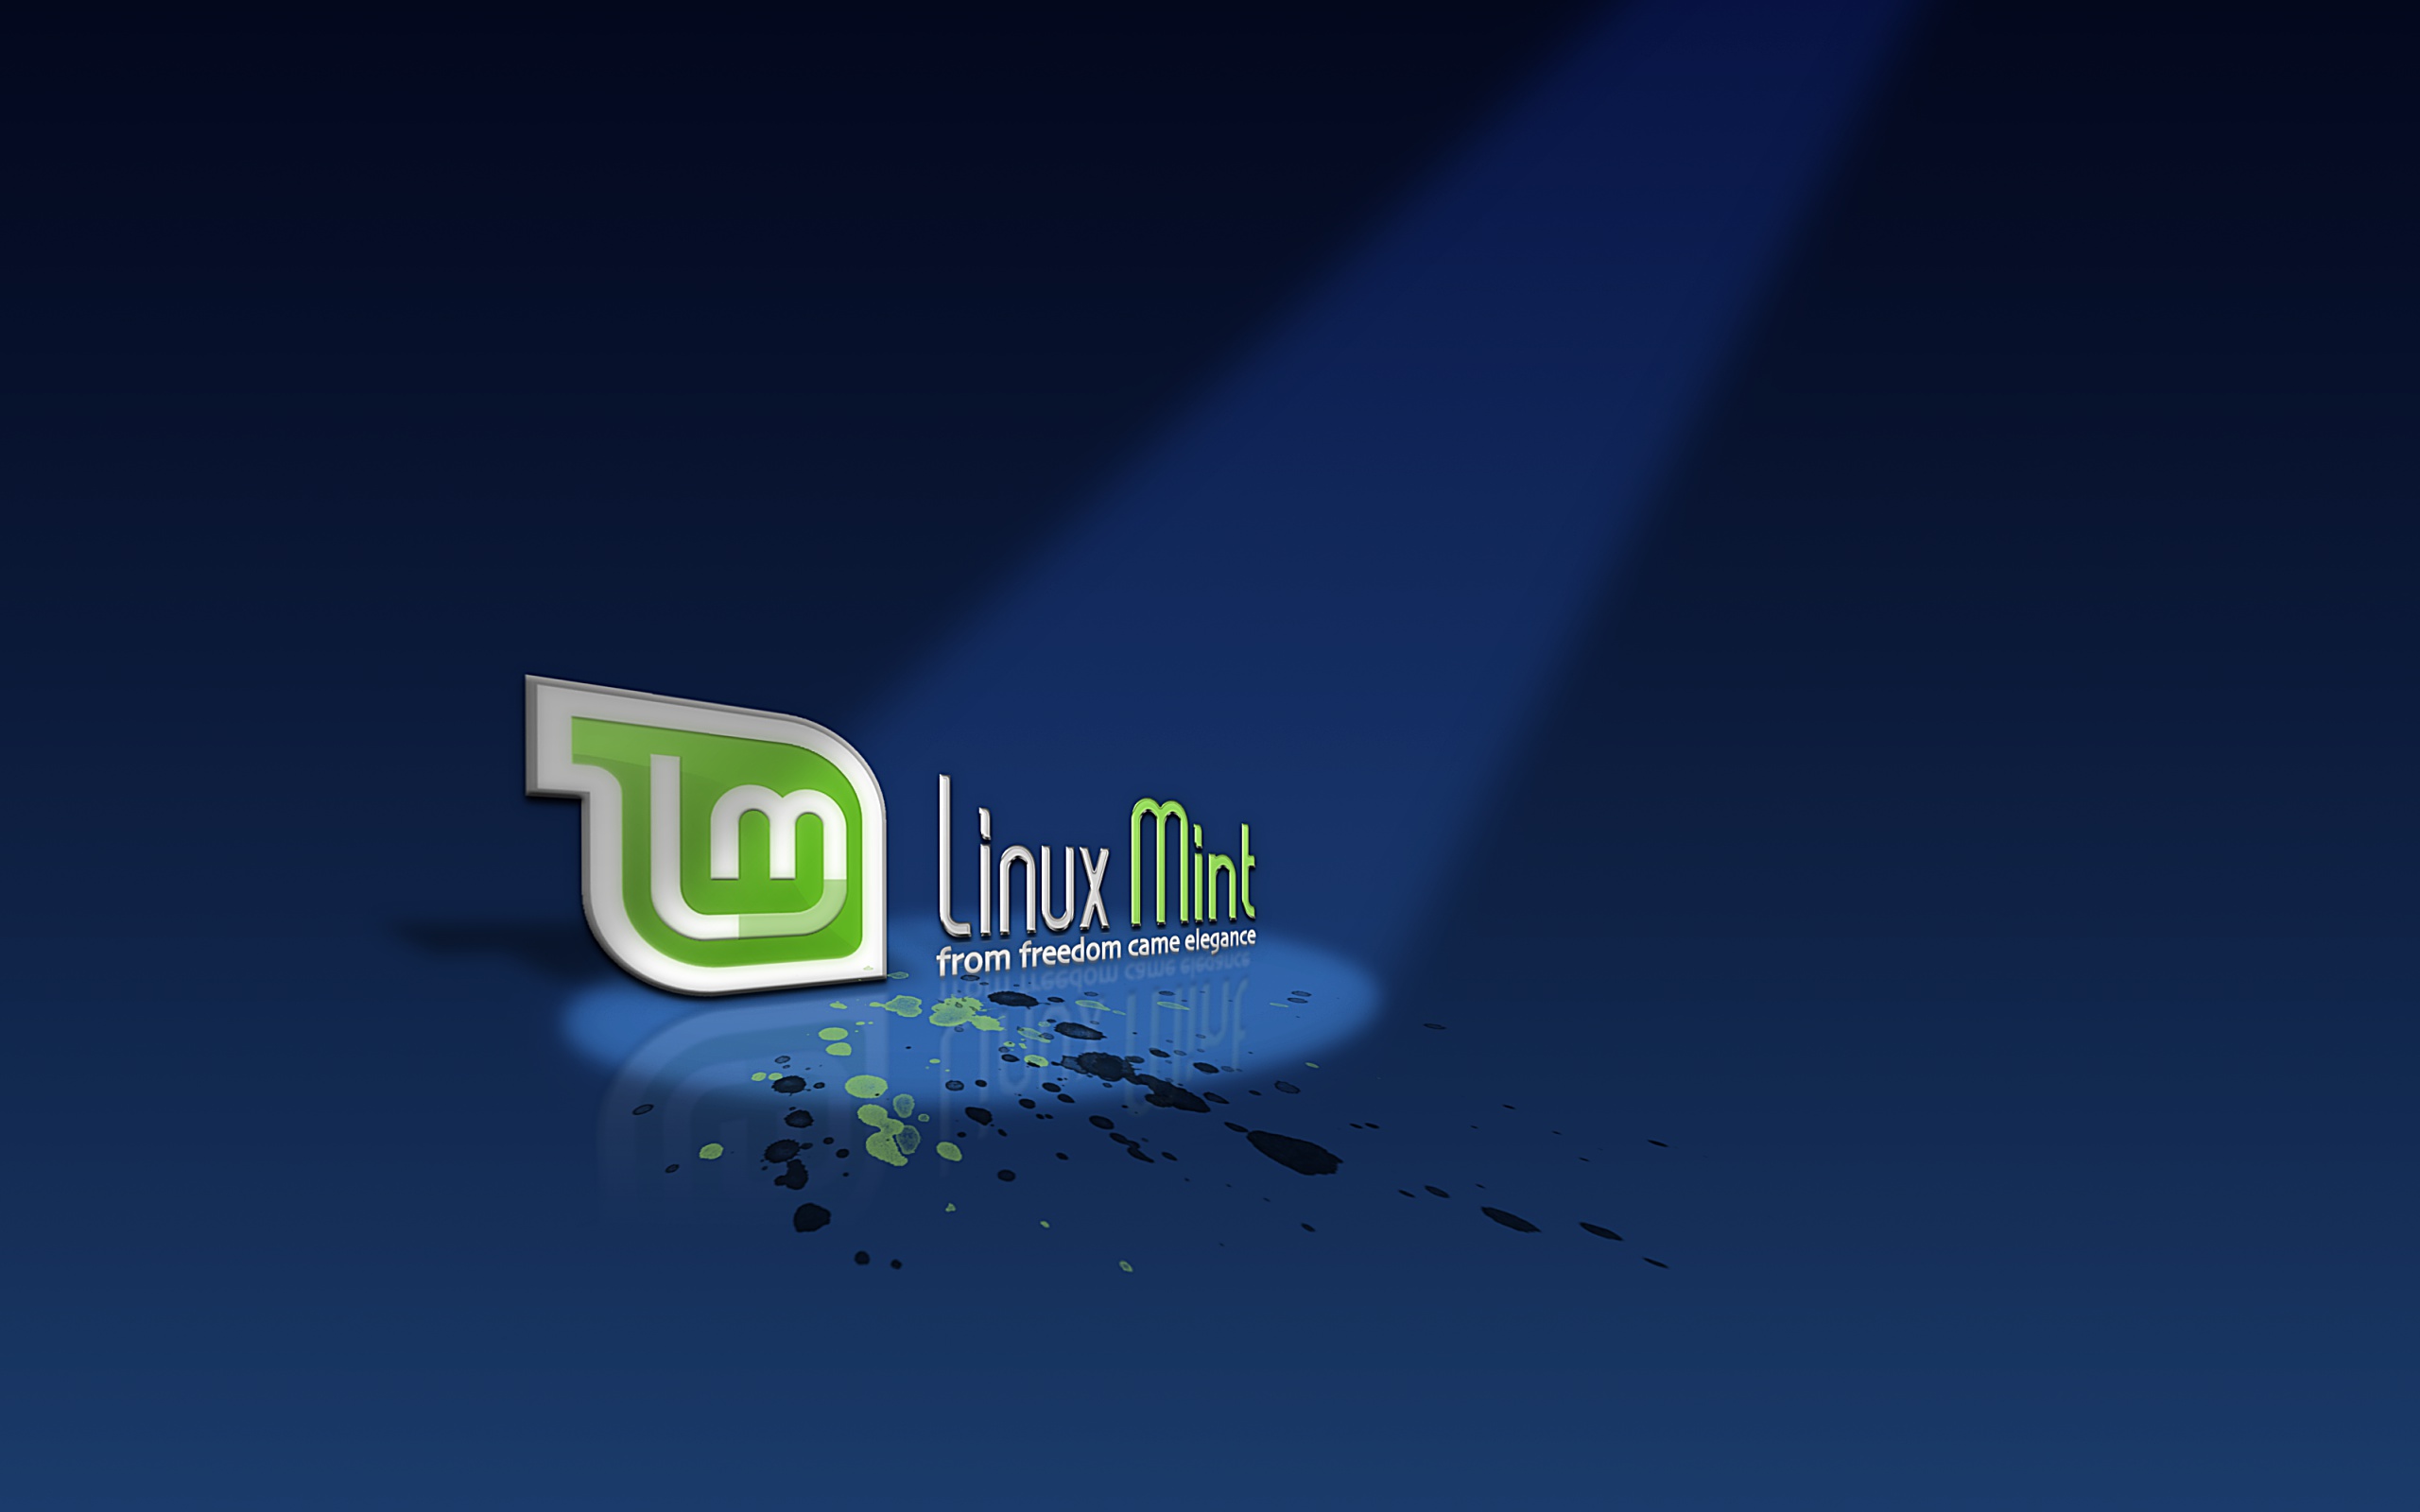 Linux Mint Fond D Ecran Hd Arriere Plan 2560x1600 Id 1044730 Wallpaper Abyss